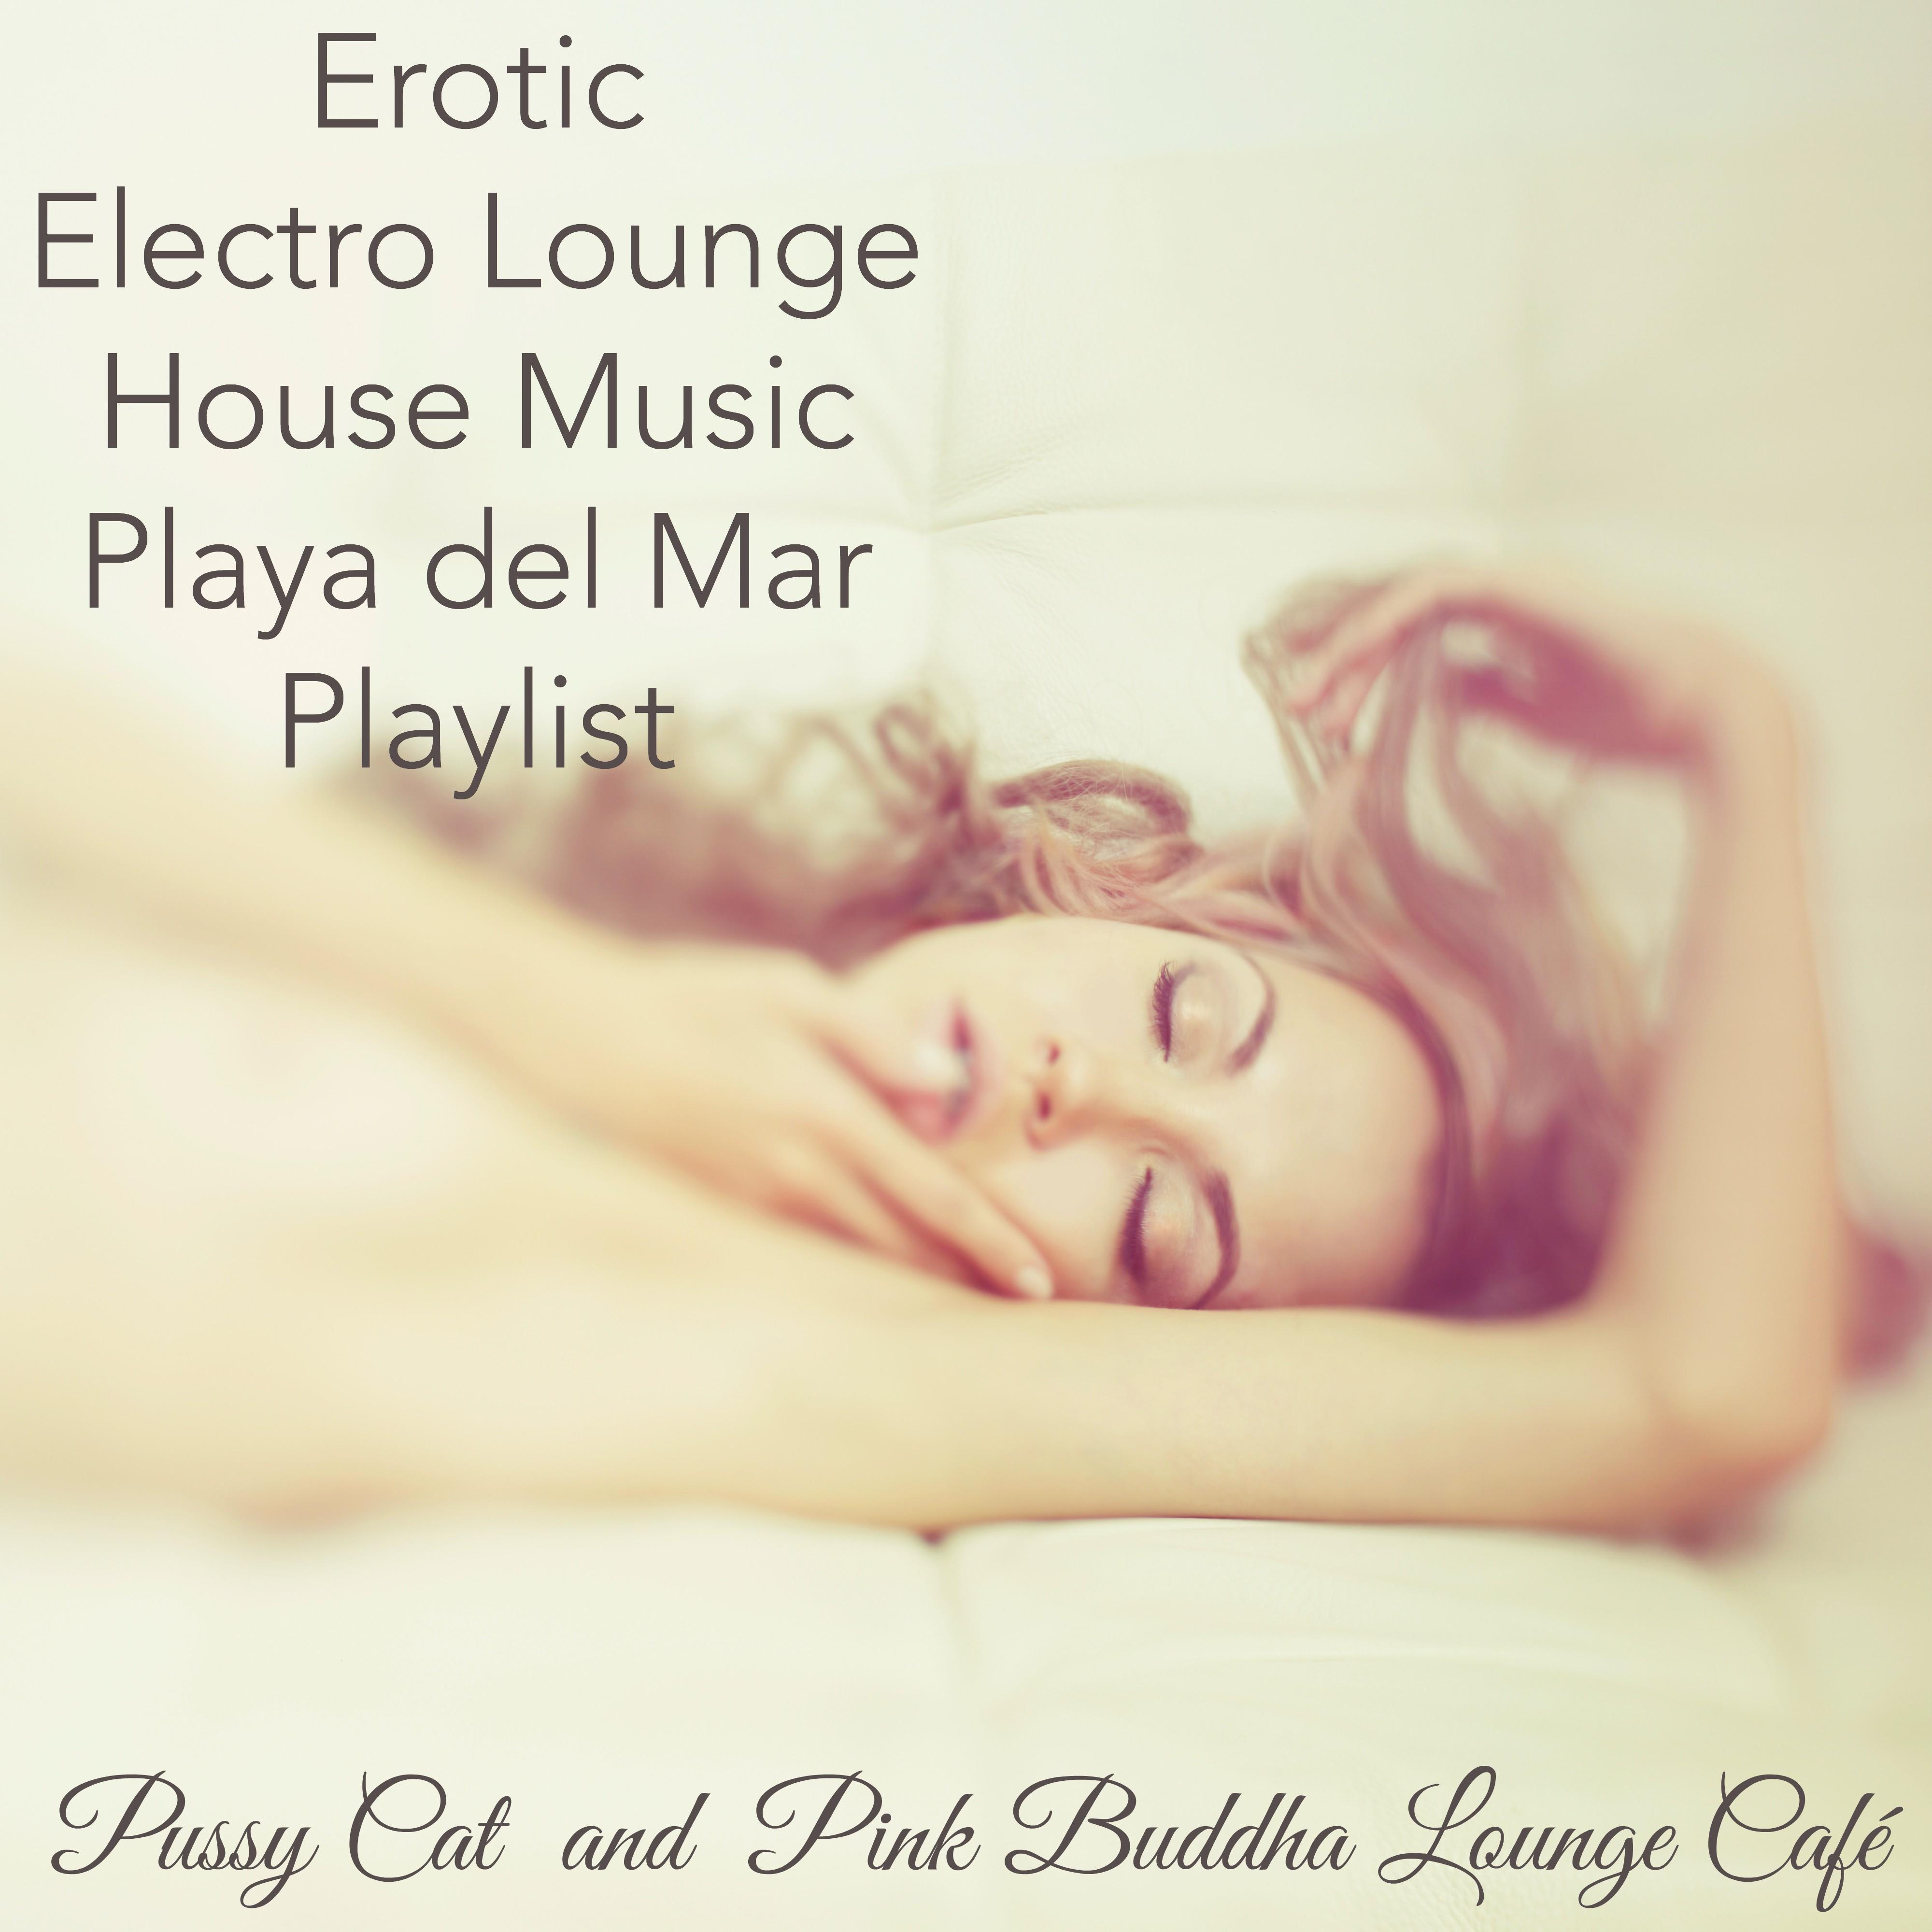 Erotic Electro Lounge House Music Playa del Mar Playlist